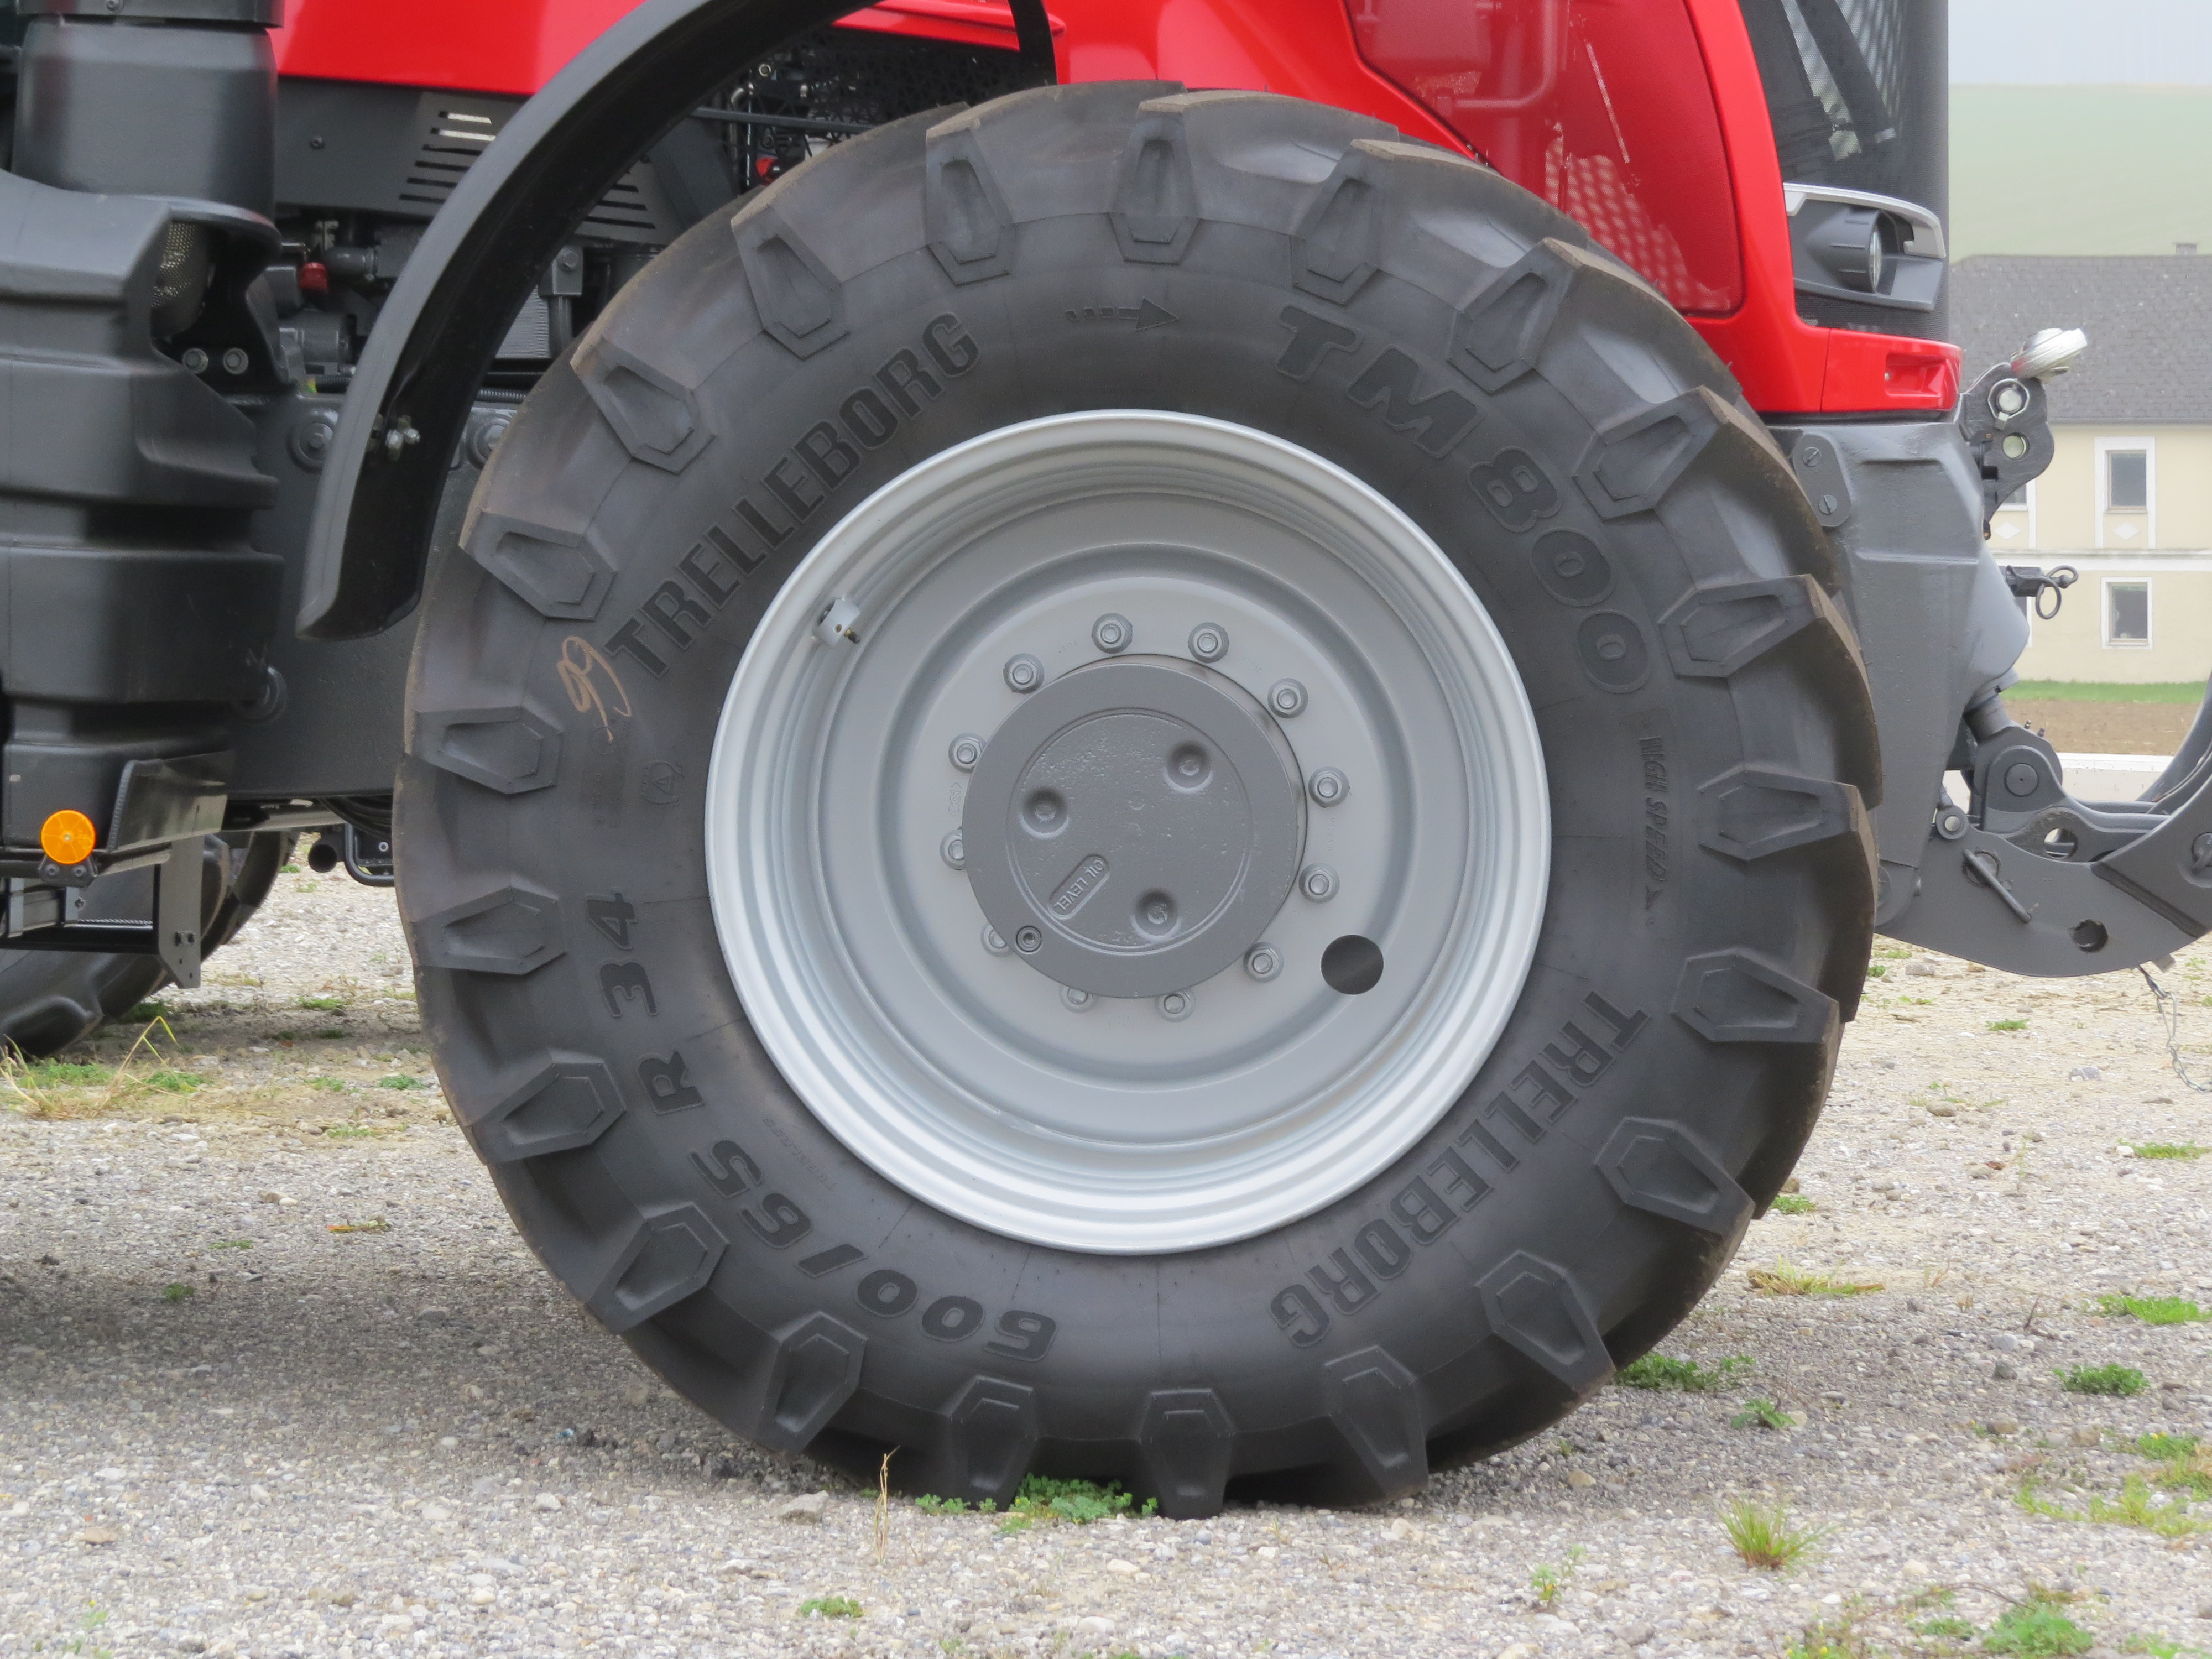 2018-11-09 (103) Trelleborg TM 800 600-65 R 34 tire of Massey Ferguson 8740 S in Wilhersdorf, Ober-Grafendorf, Austria